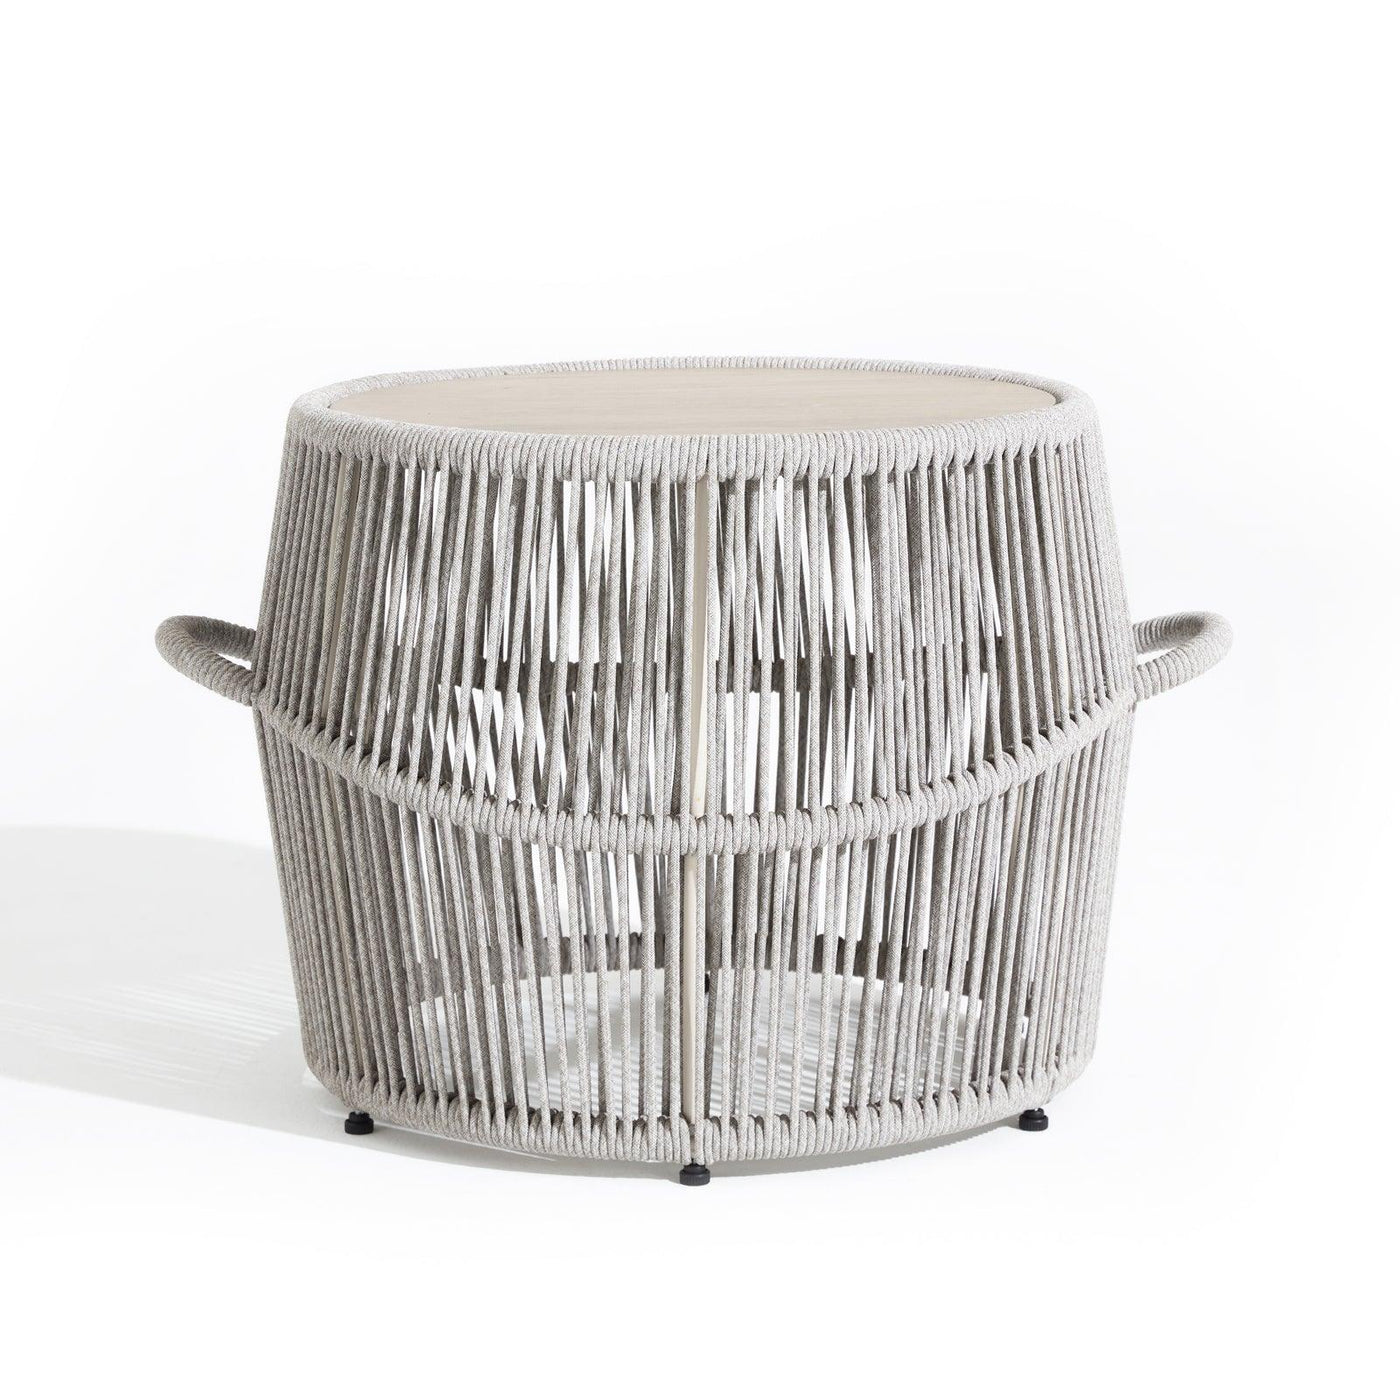 Natural - Round Coffee Table, rope design, ceramic glass tabletop, grey finish- Sunsitt Signature